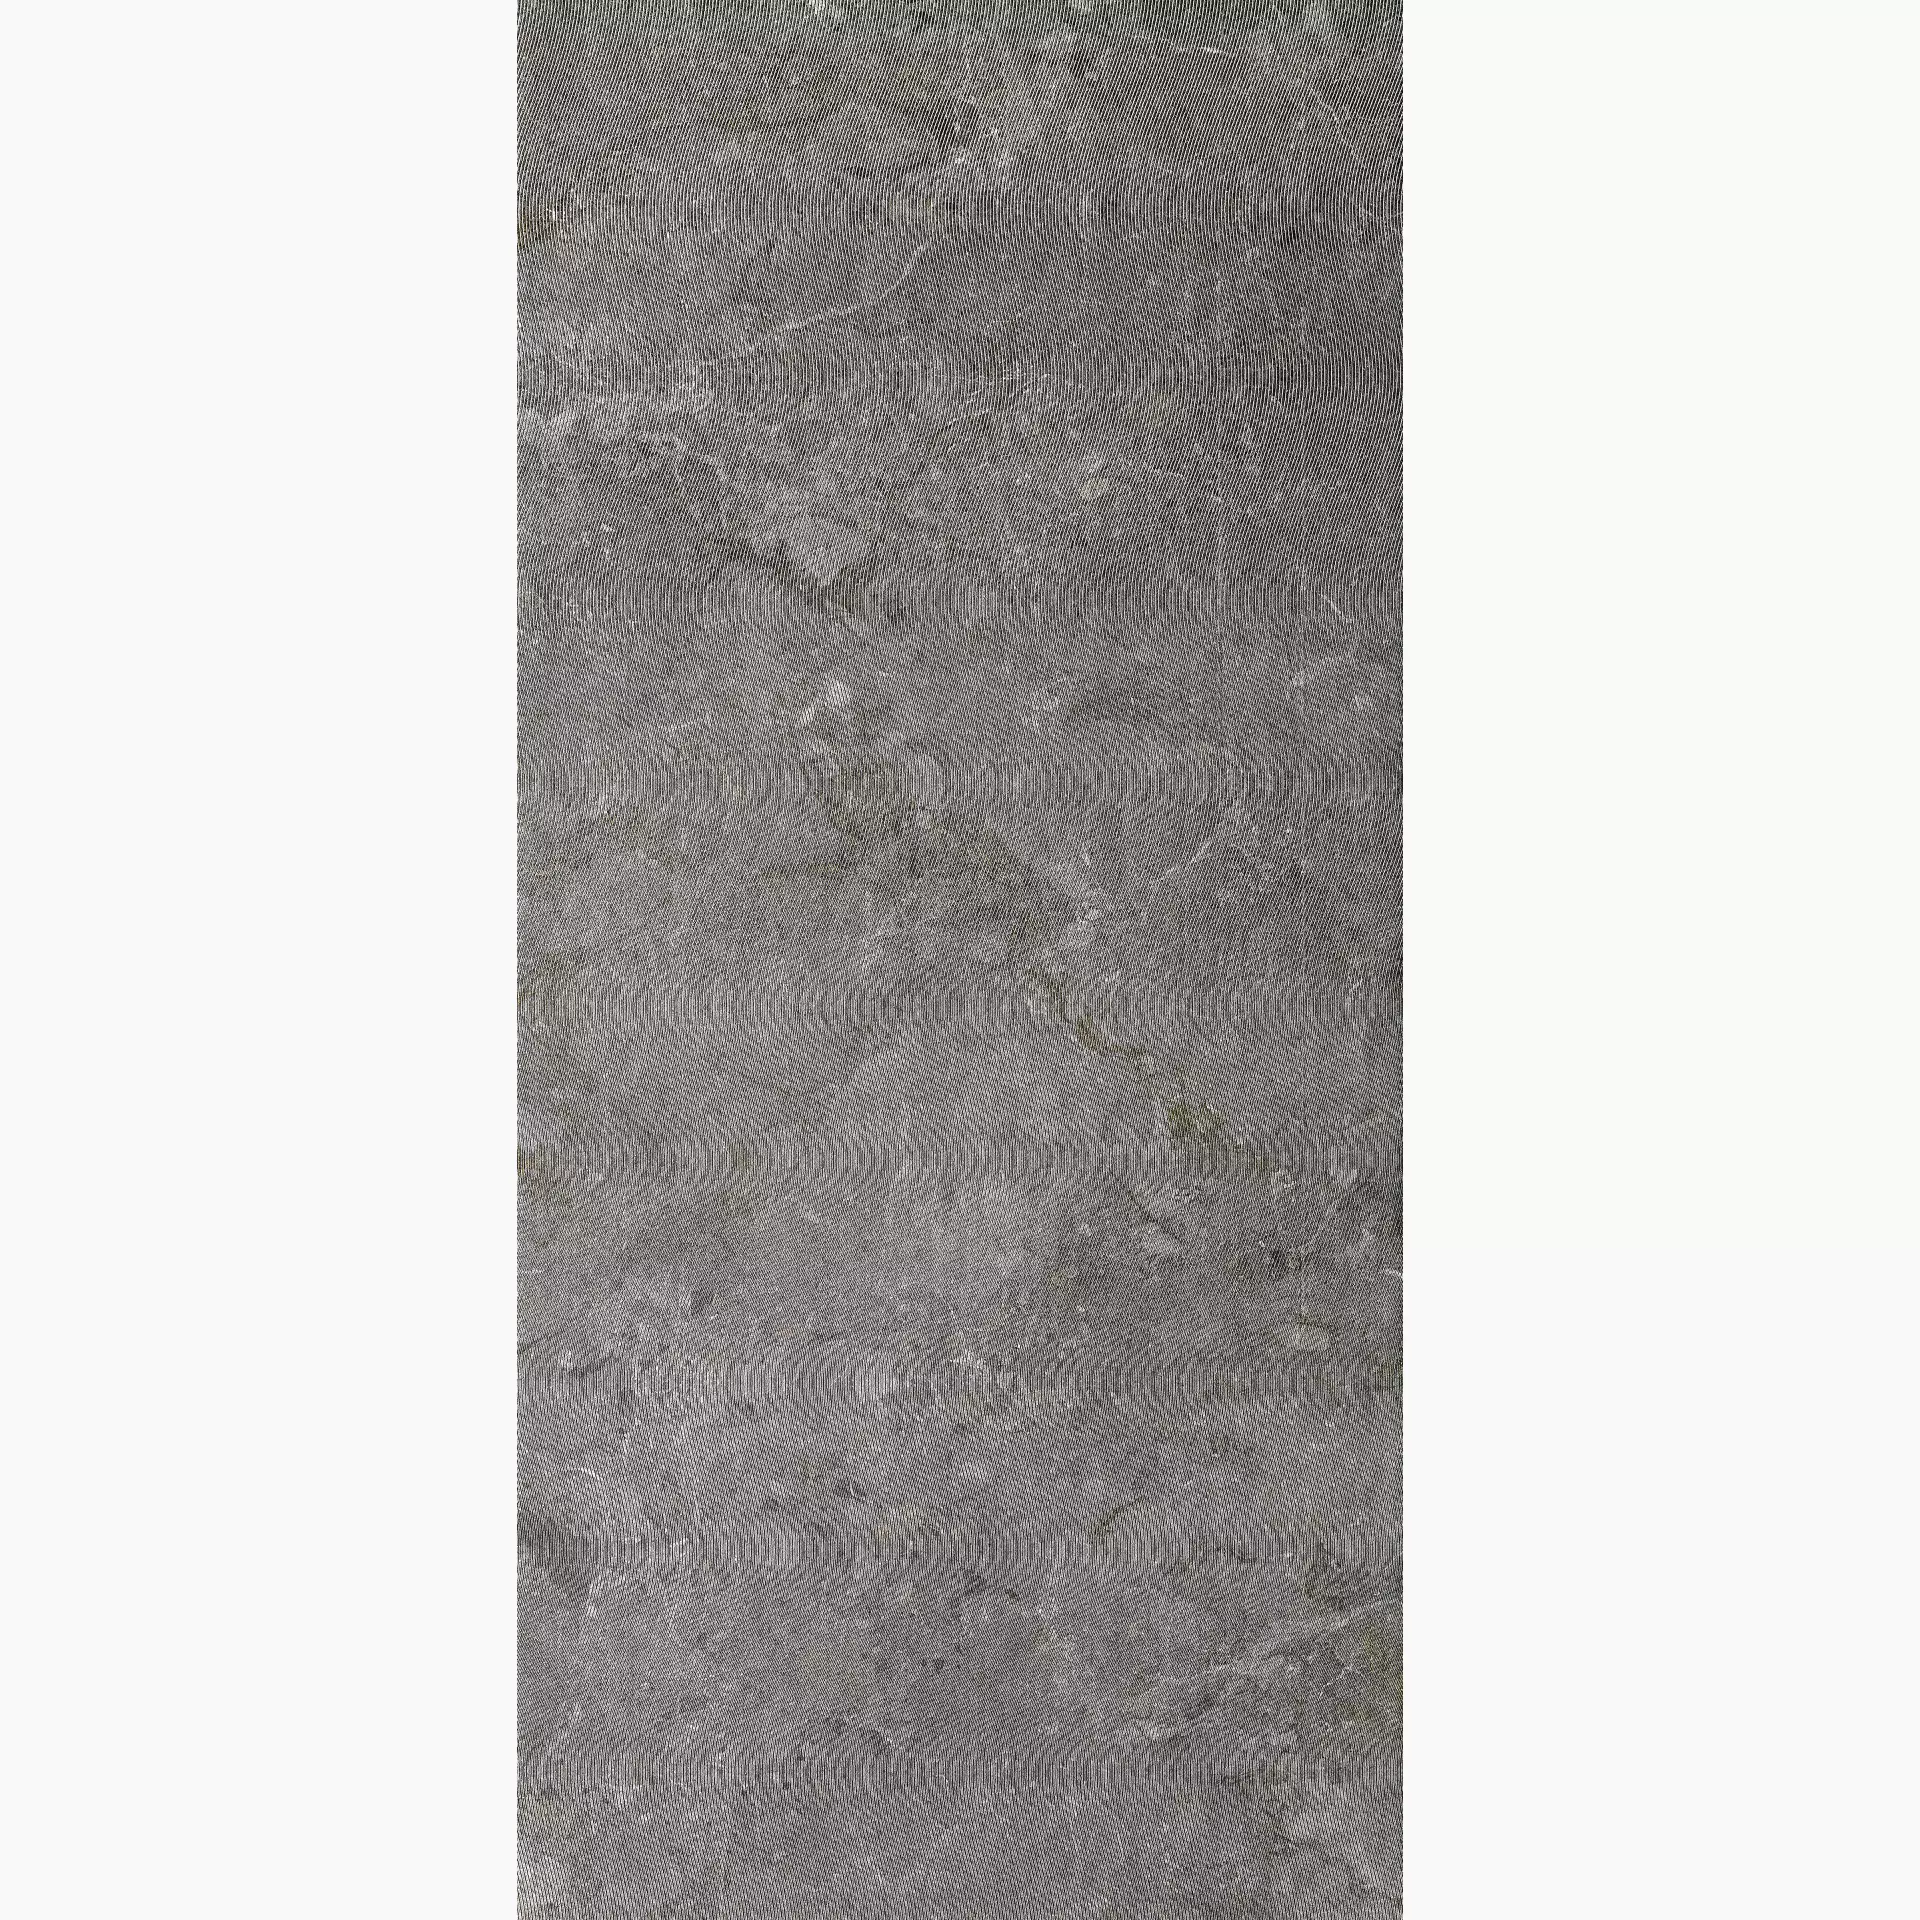 Del Conca Hse Stone Edition Dinamik Breccia Grey Hse Naturale Stories LZSE05STORIR 120x260cm rectified 6,5mm